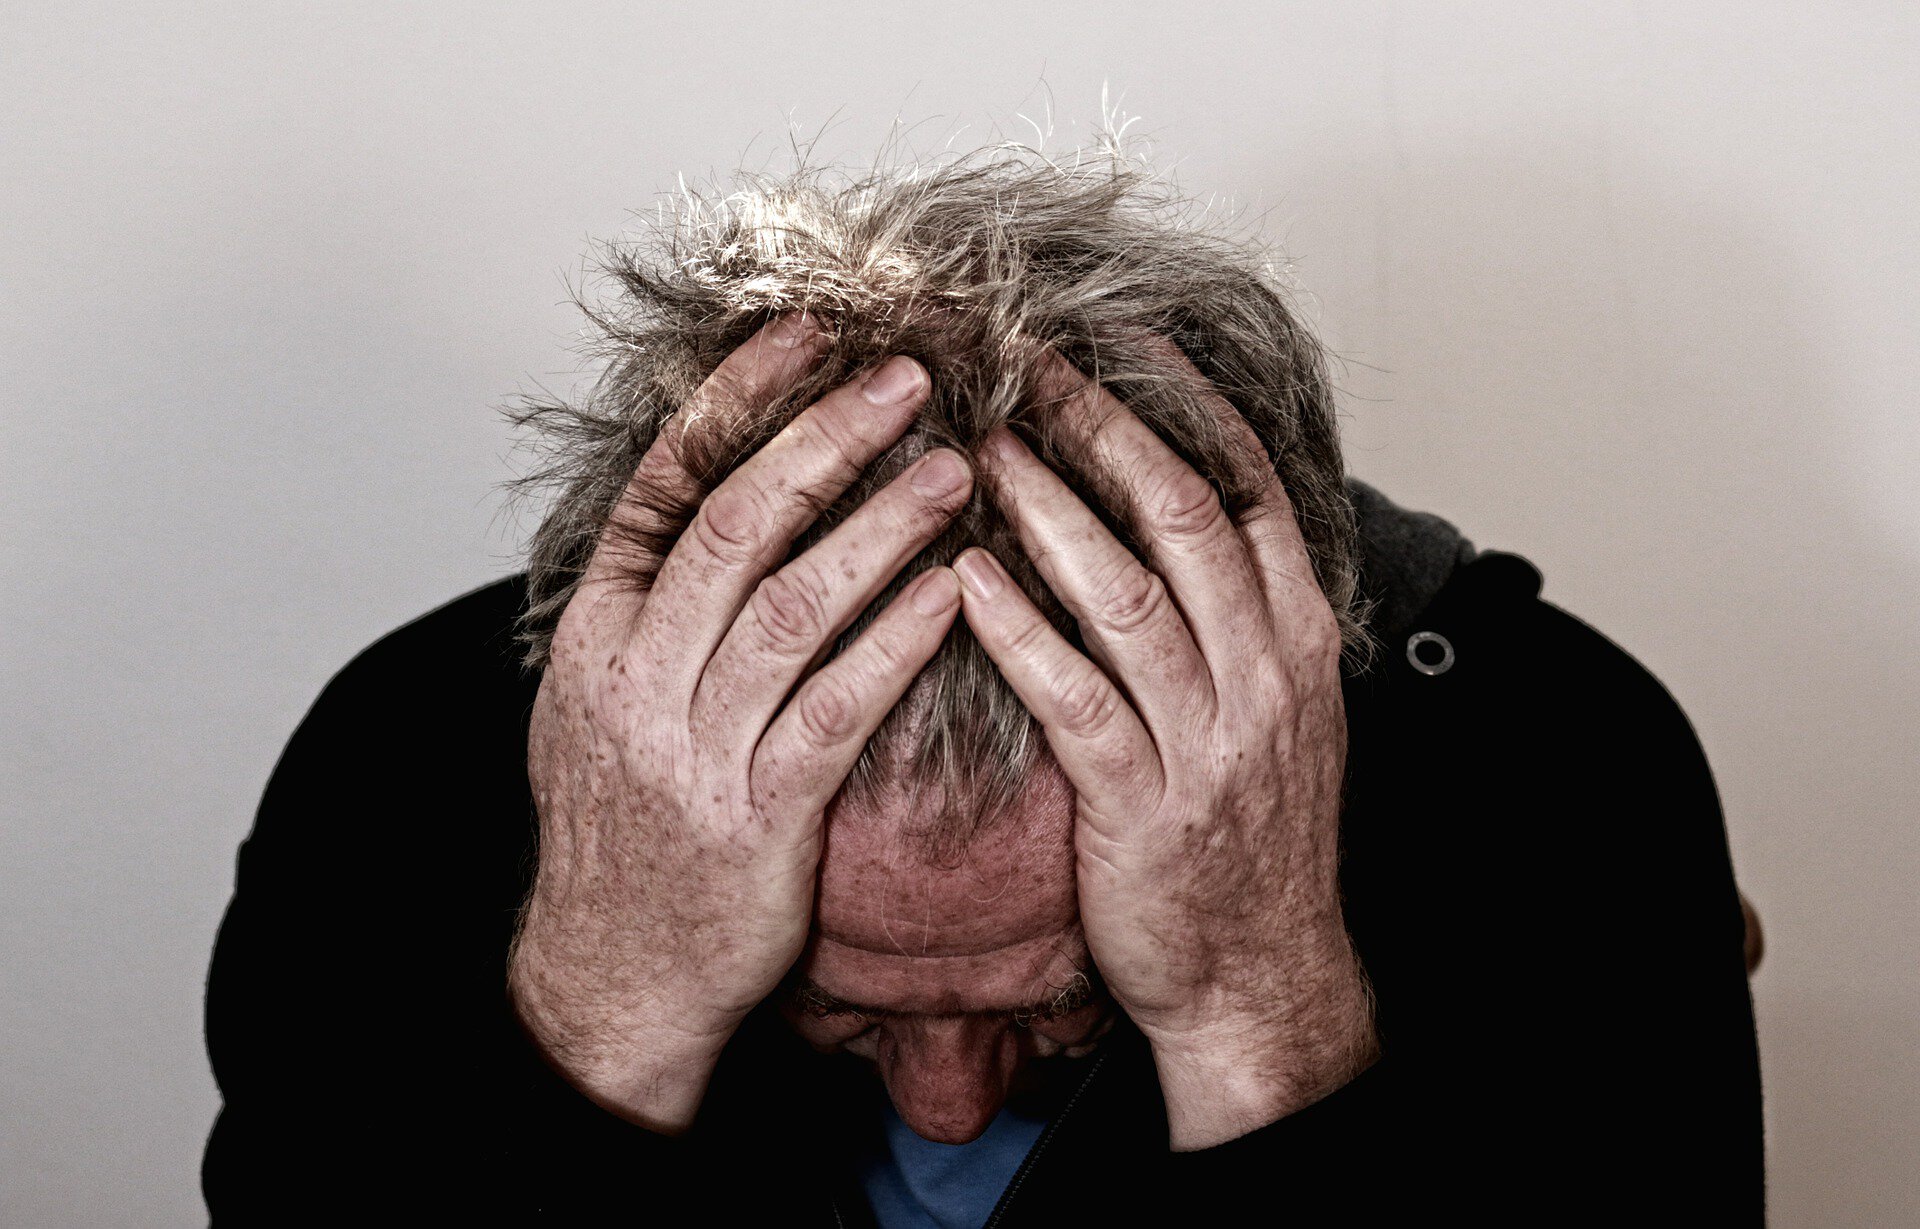 Migraine treatment patient model with his head in his hands